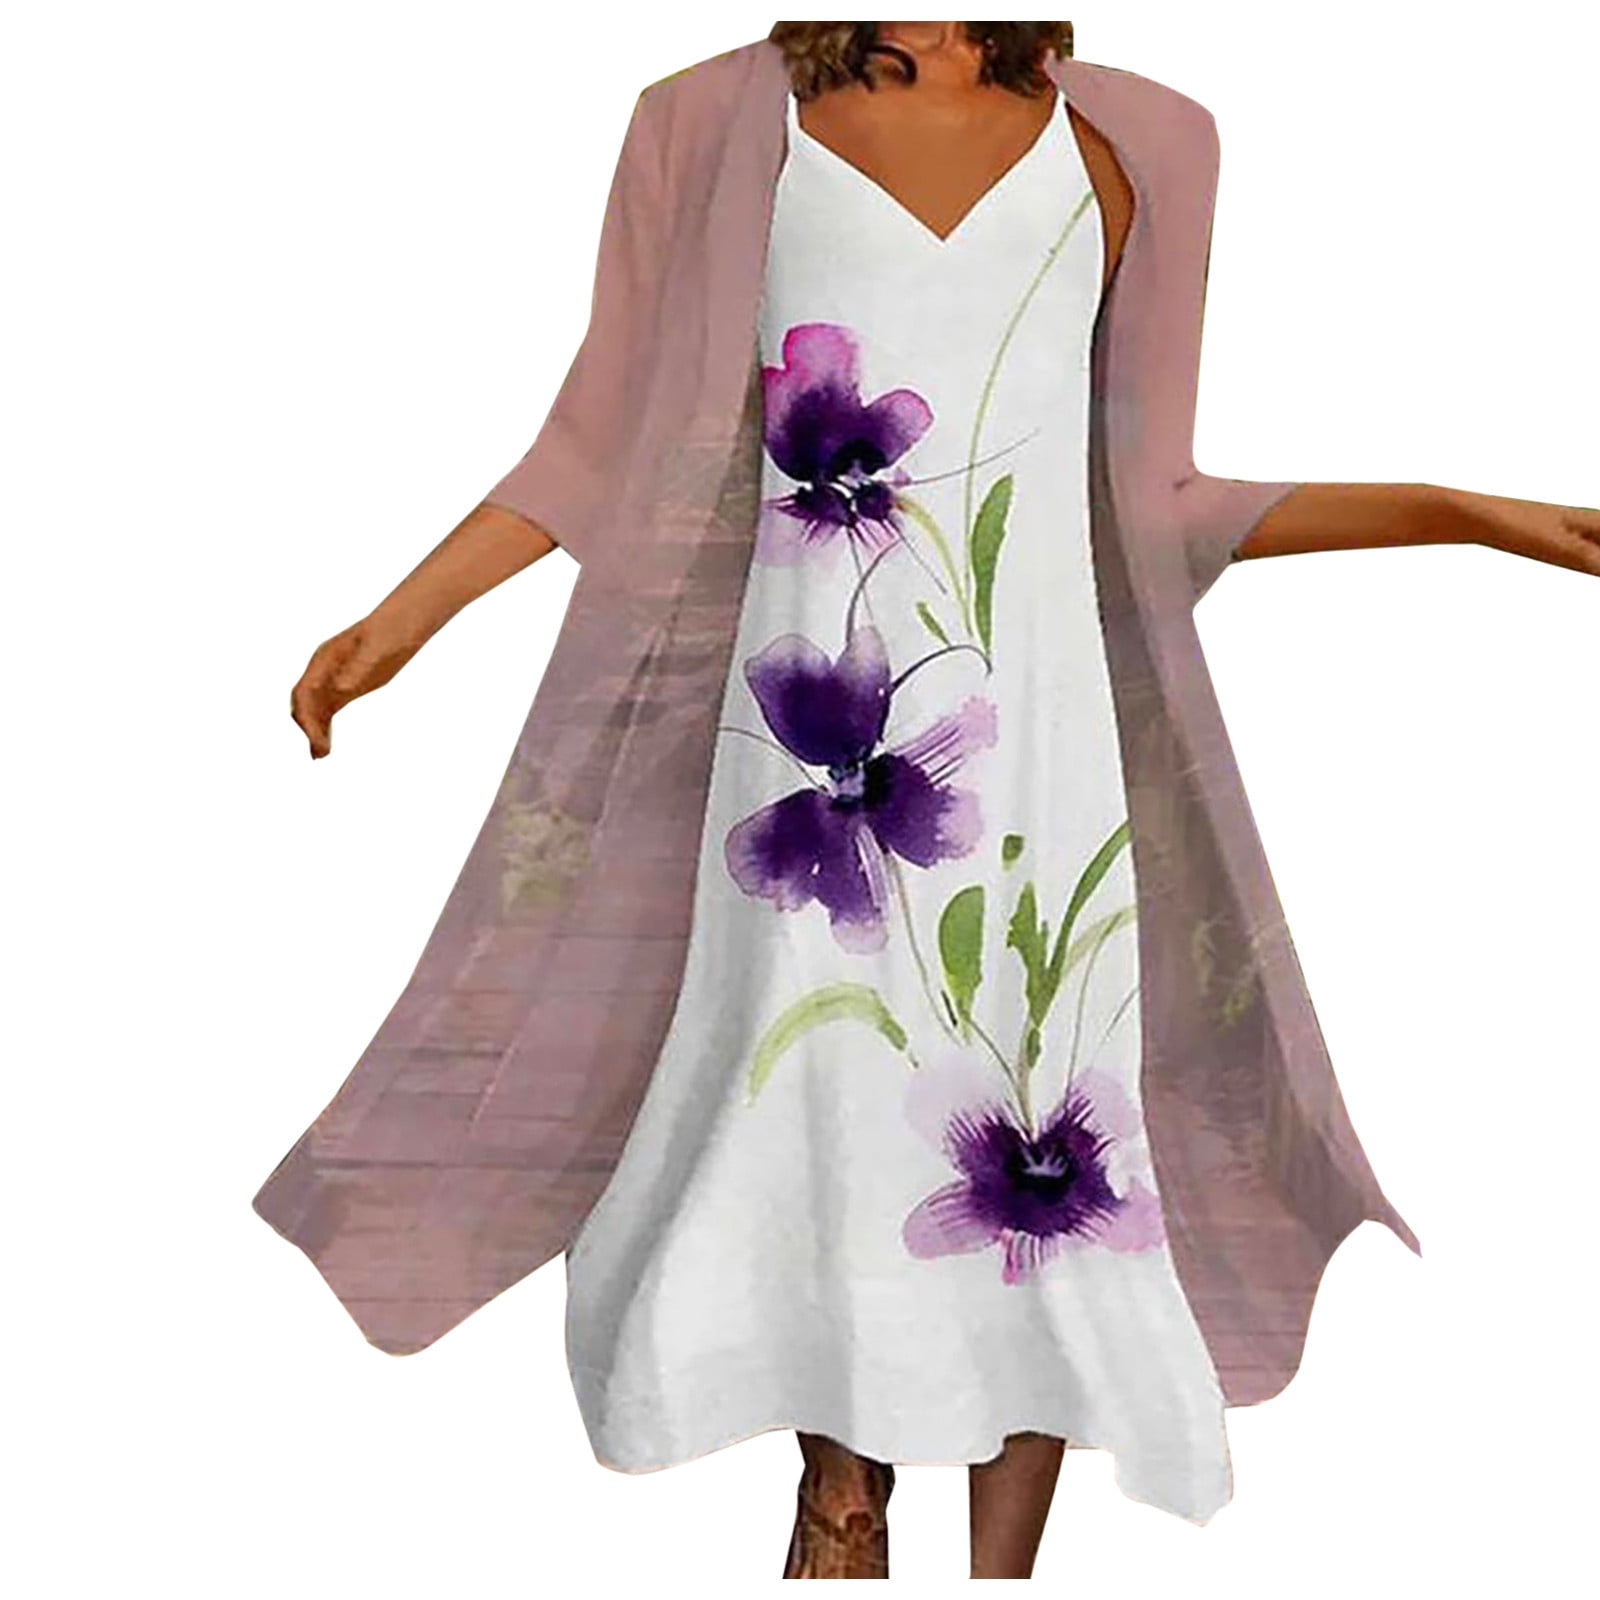 Cozy Meets Romantic: Long Cardigan Over Floral Maxi Dress - Meagan's Moda